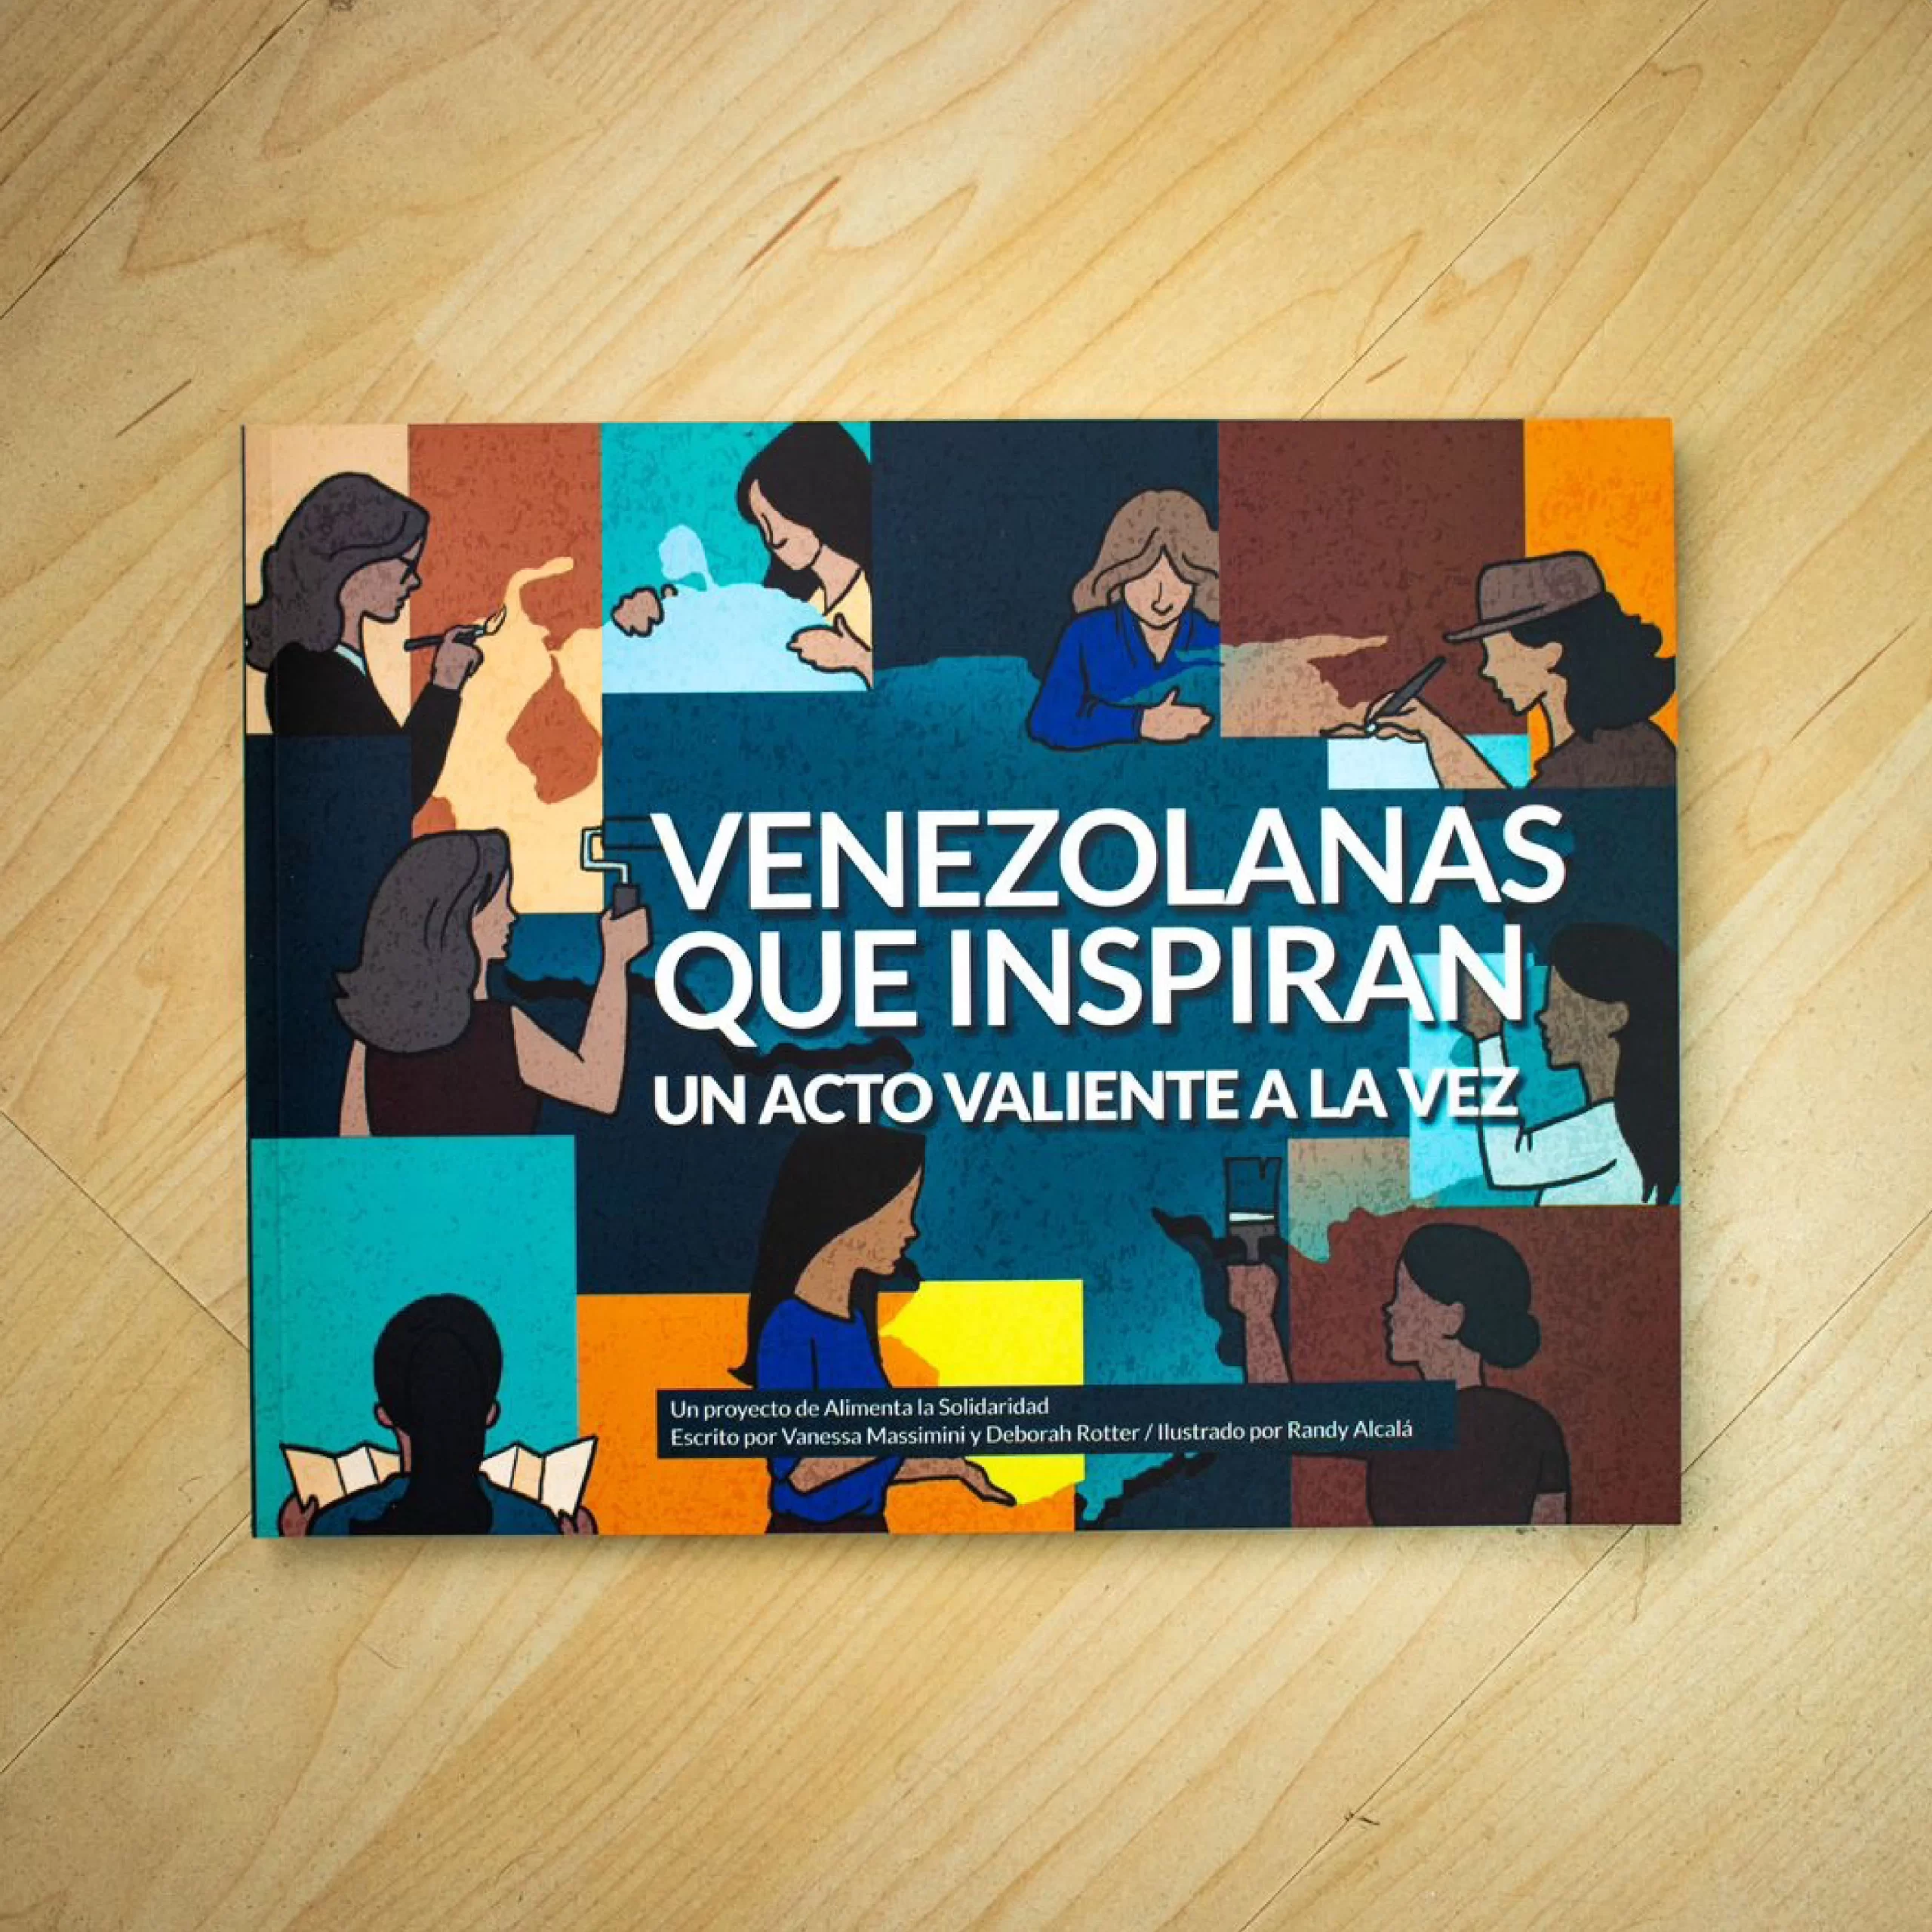 Libro “Venezolanas queinspiran”